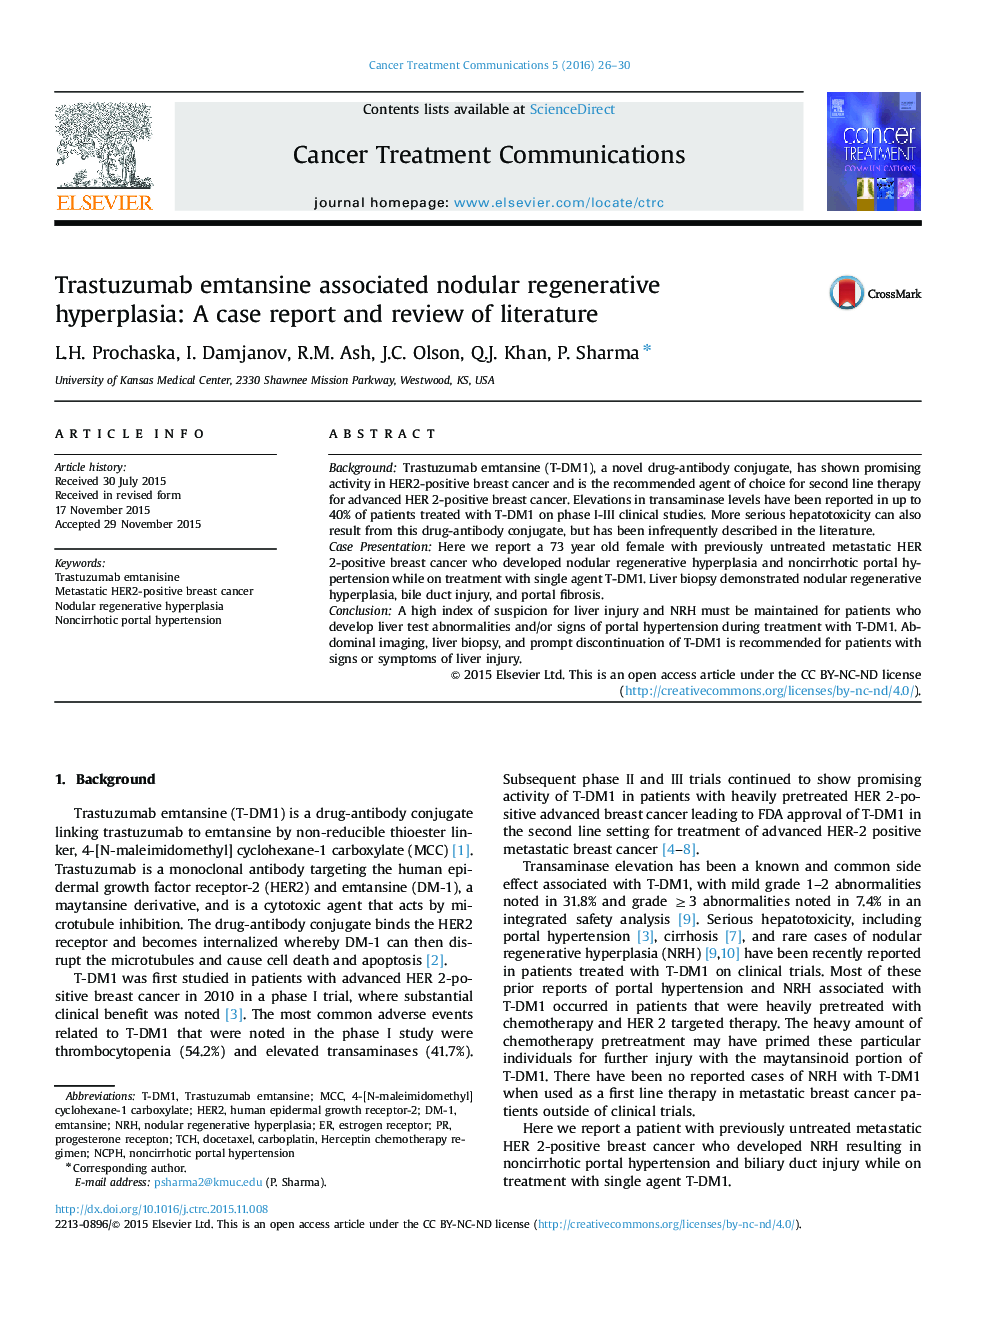 Trastuzumab emtansine associated nodular regenerative hyperplasia: A case report and review of literature